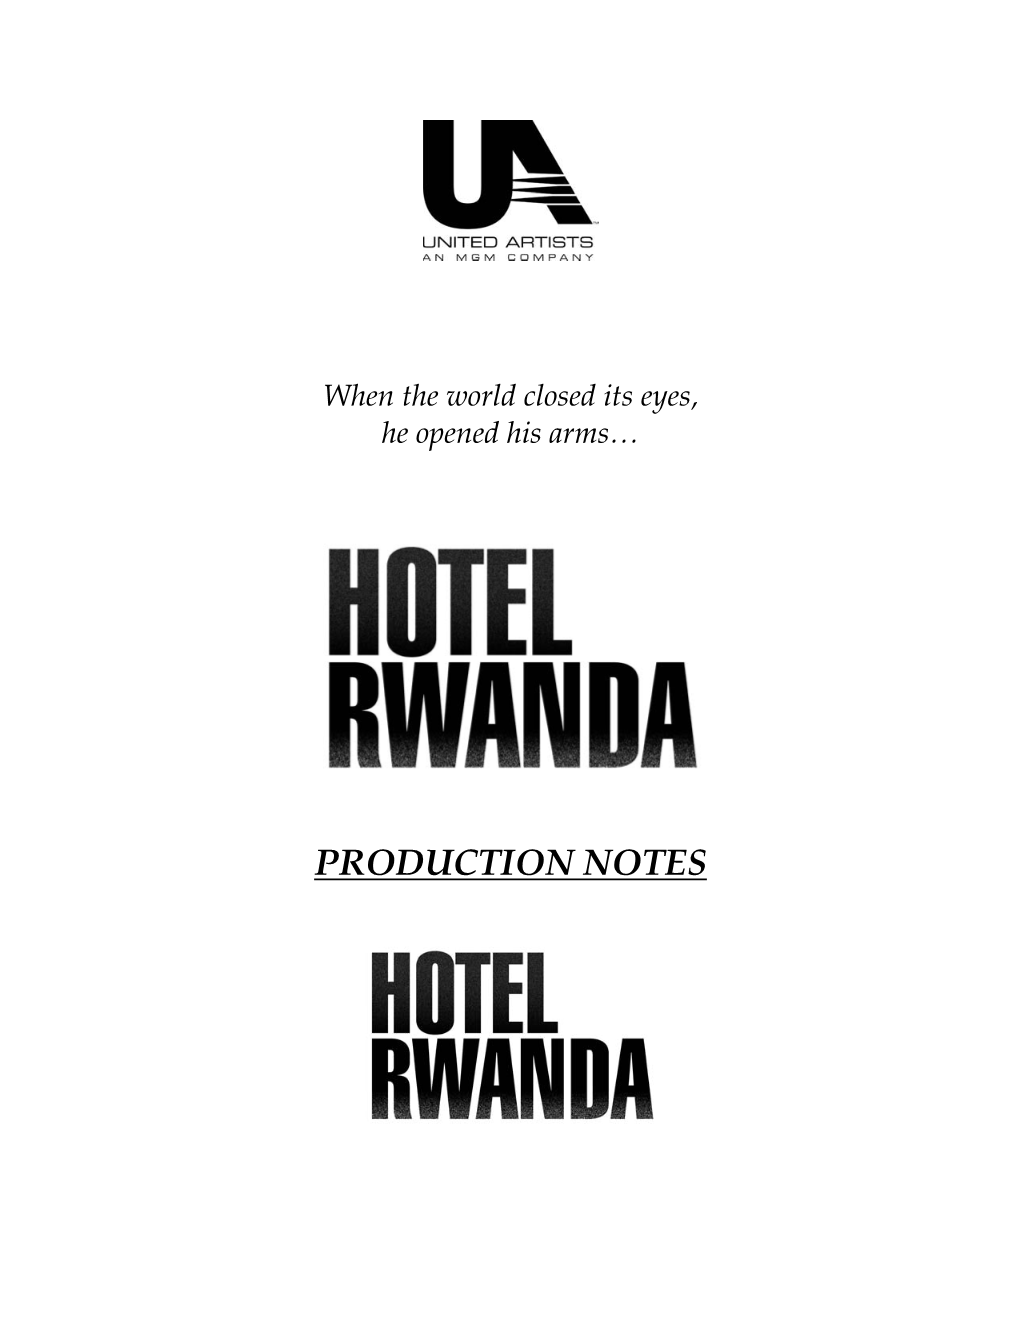 Hotel Rwanda Production Notes